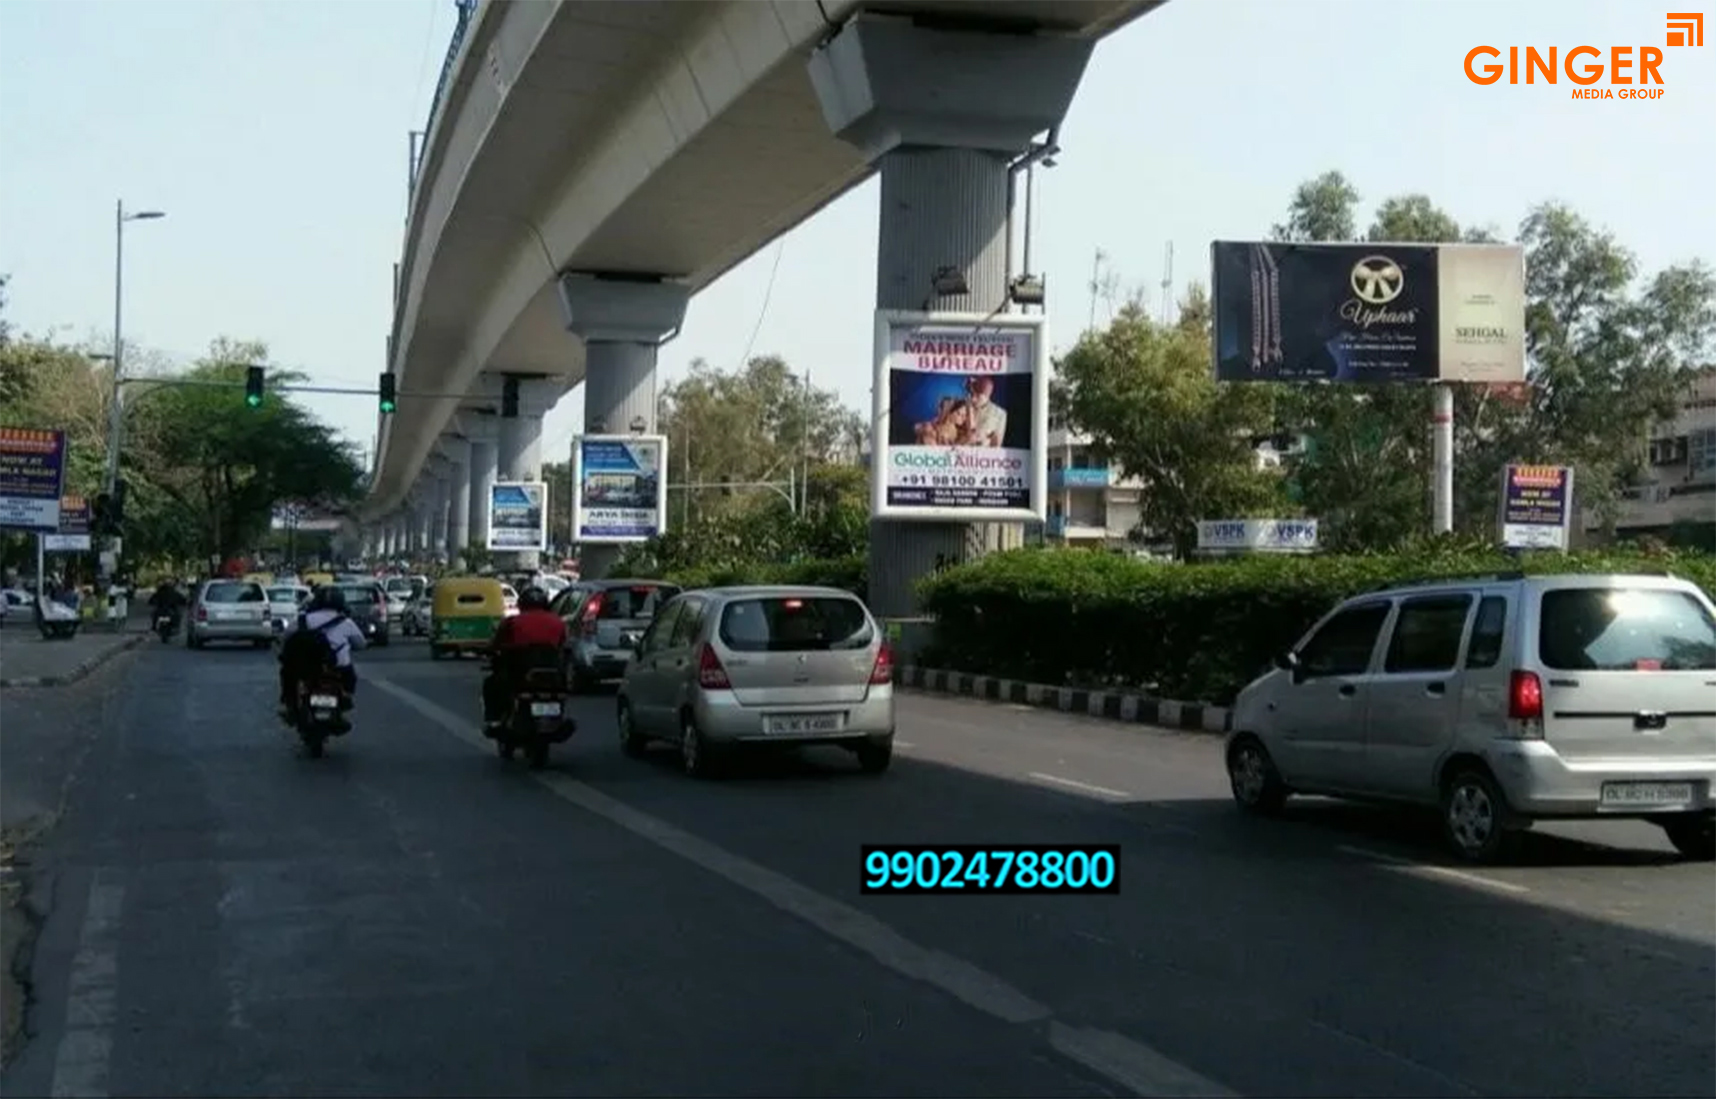 Pole Board Advertising for marriage bureau under bridge